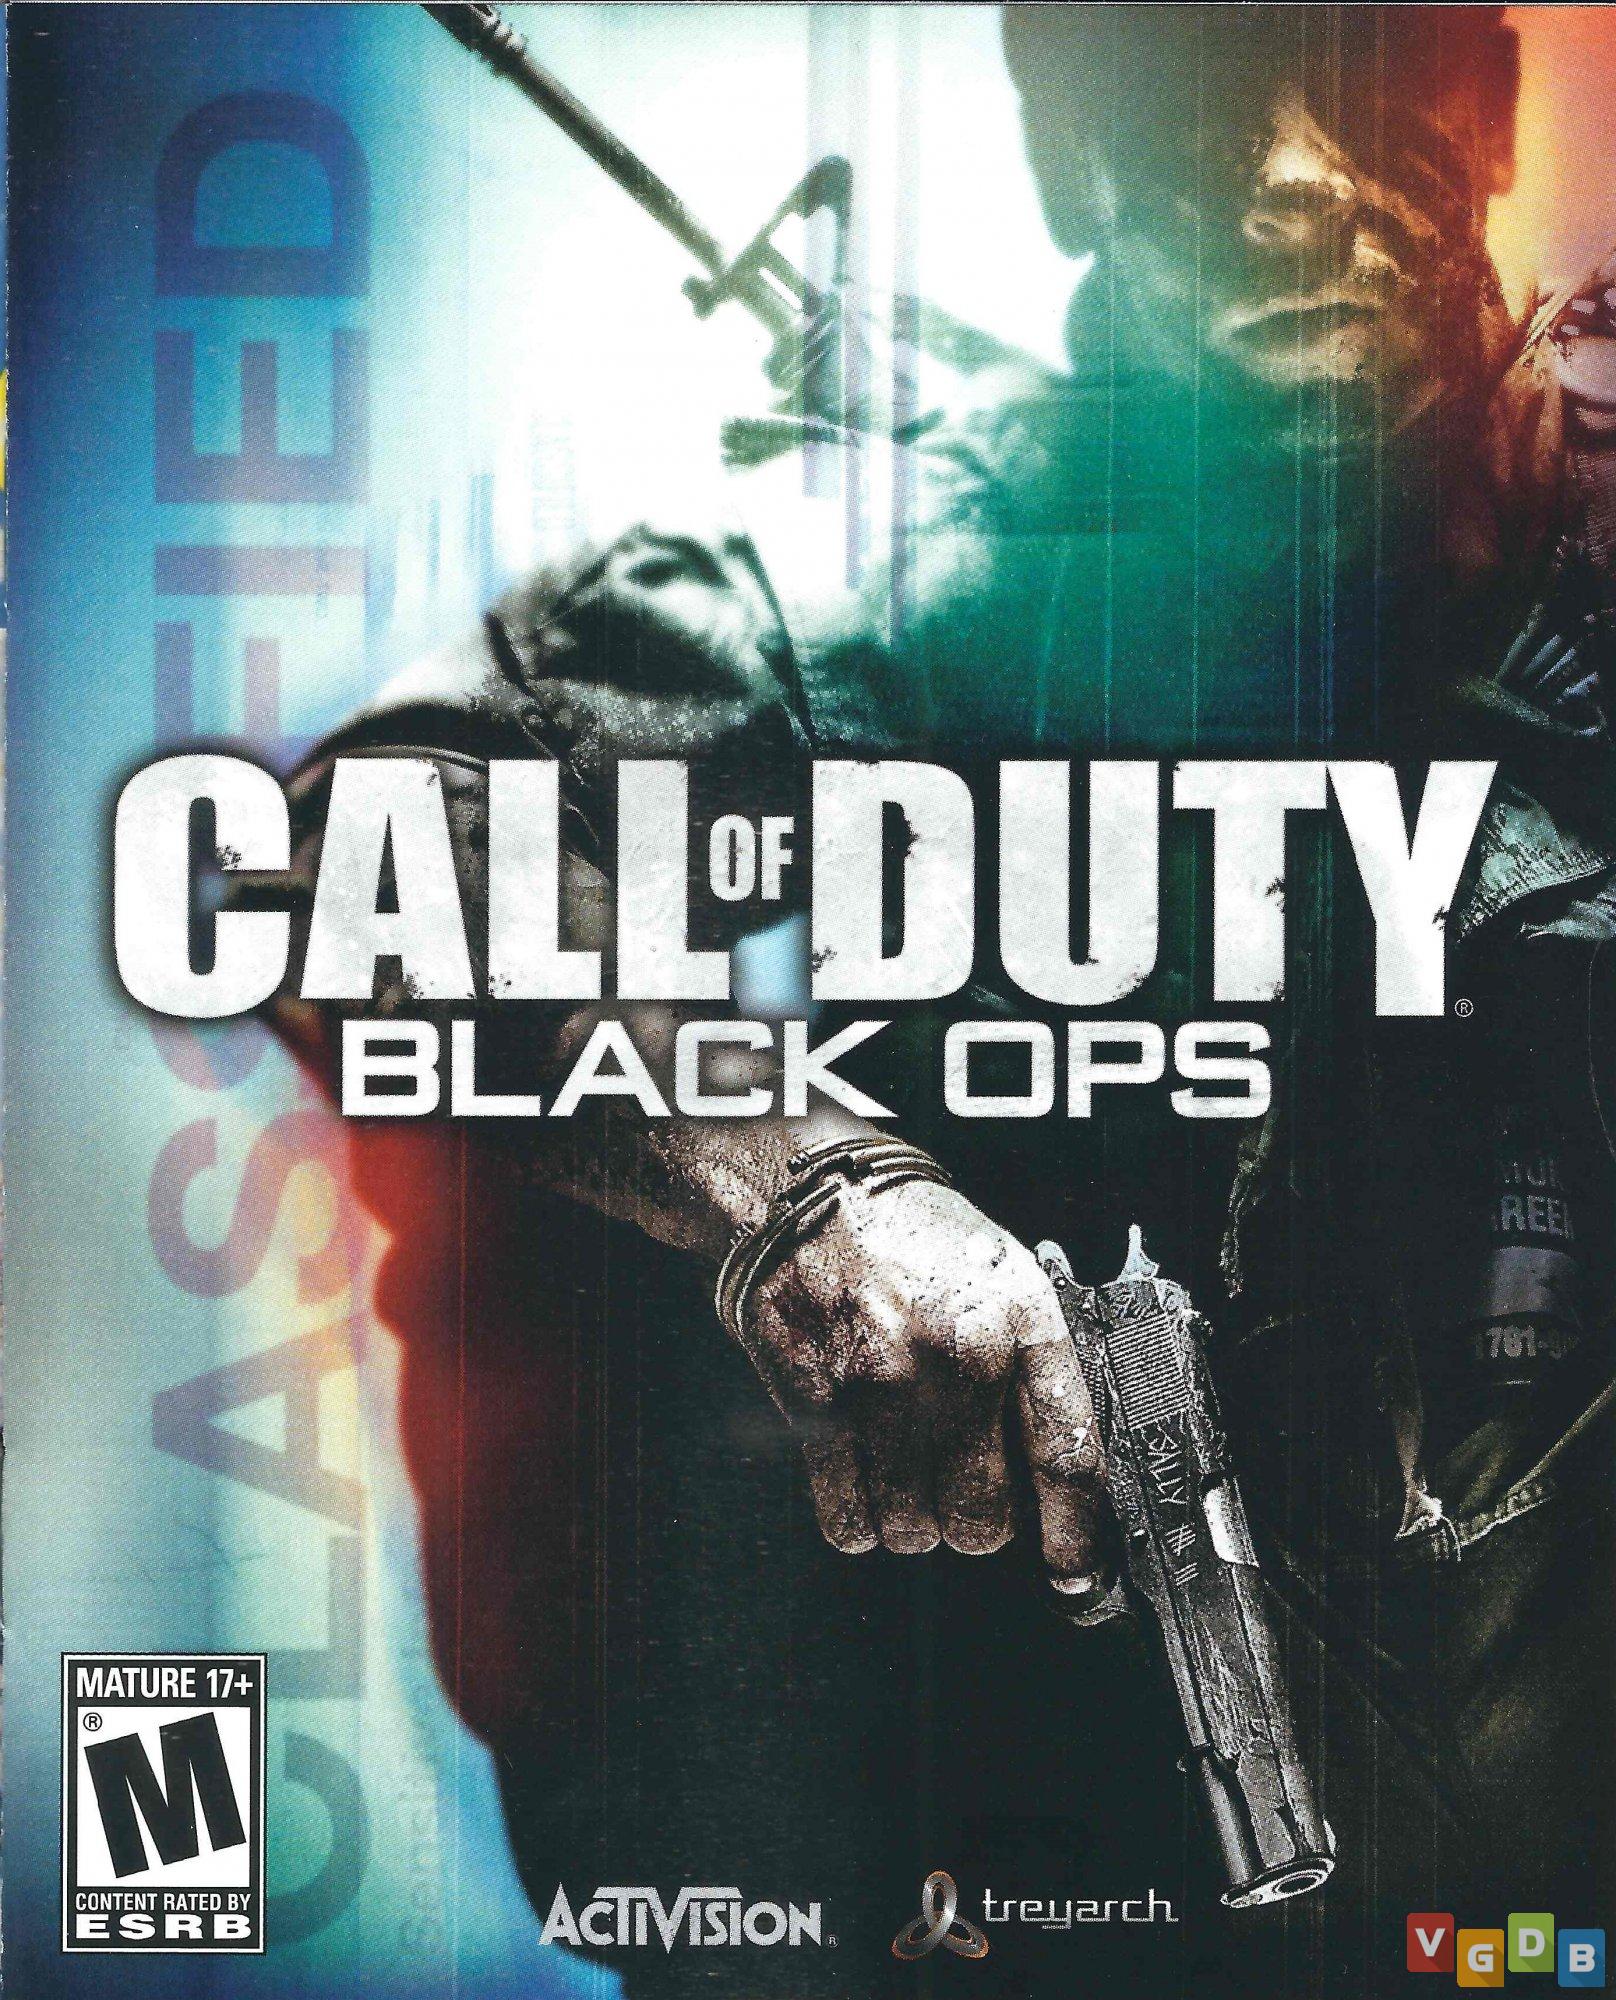 Call Of Duty Black Ops 2 – Xbox 360 (Digital) – Paulista Games